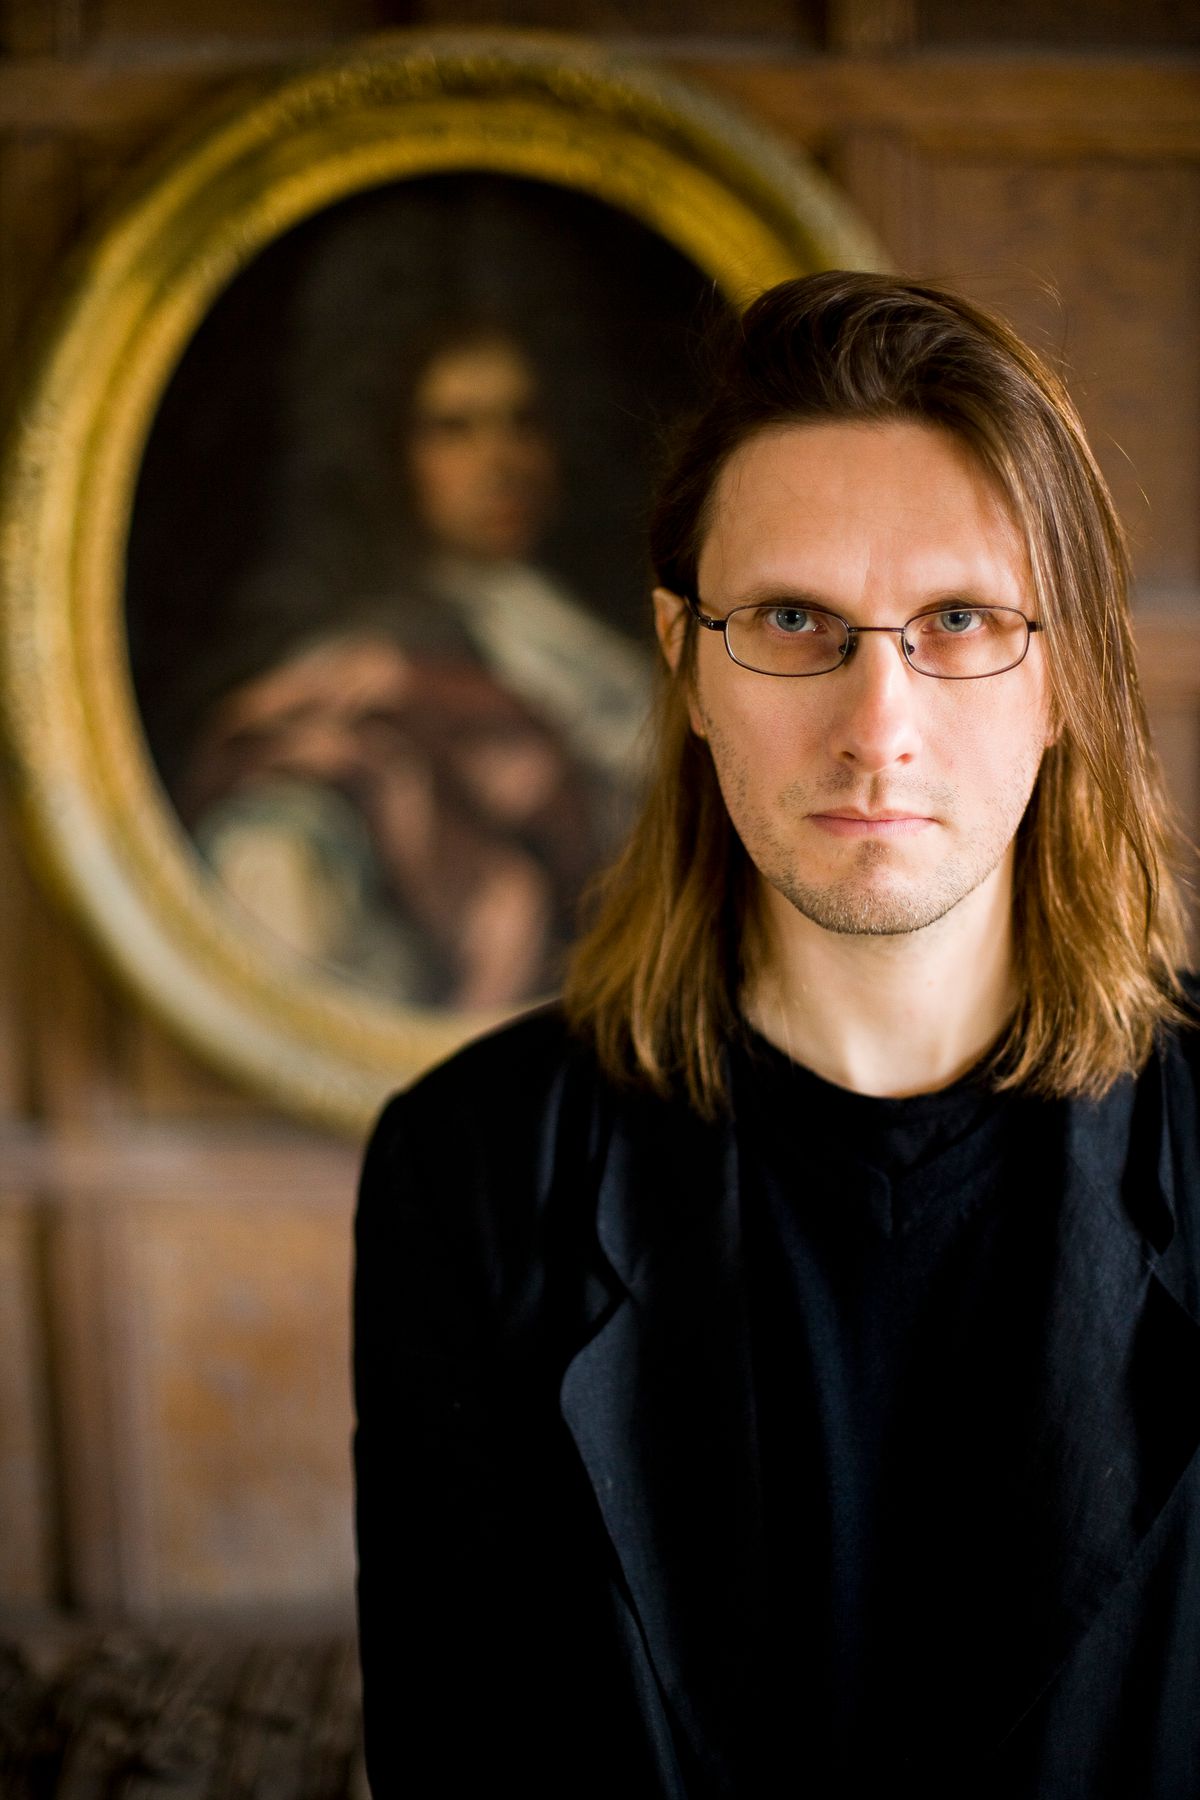 Steven Wilson - Minder somber, even indrukwekkend